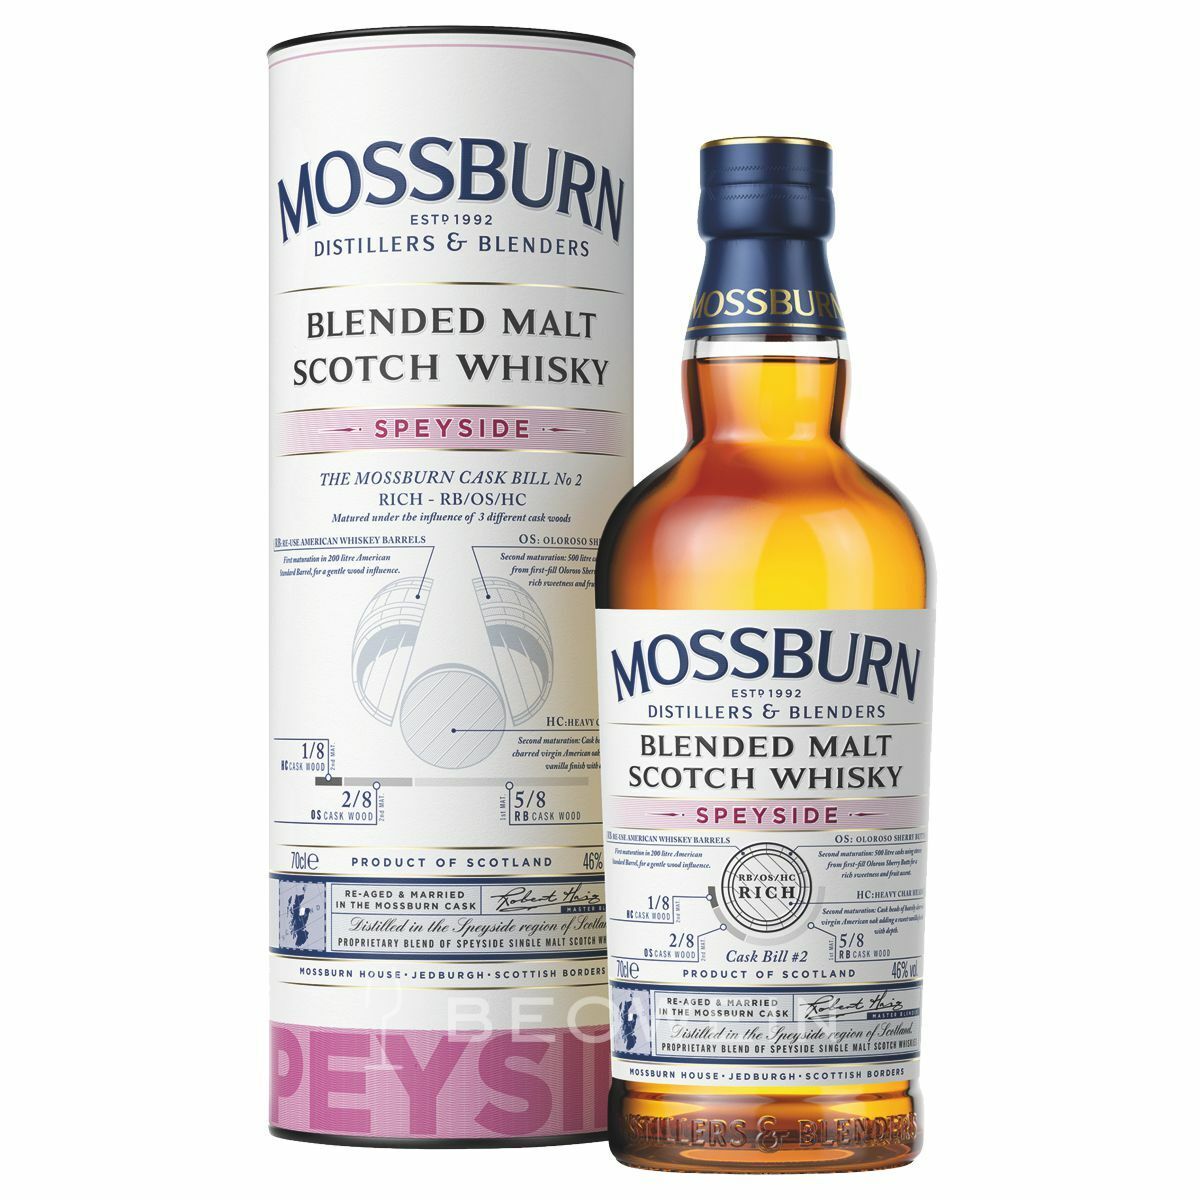 Mossburn SPEYSIDE Blended Malt Scotch Whisky 0,7l